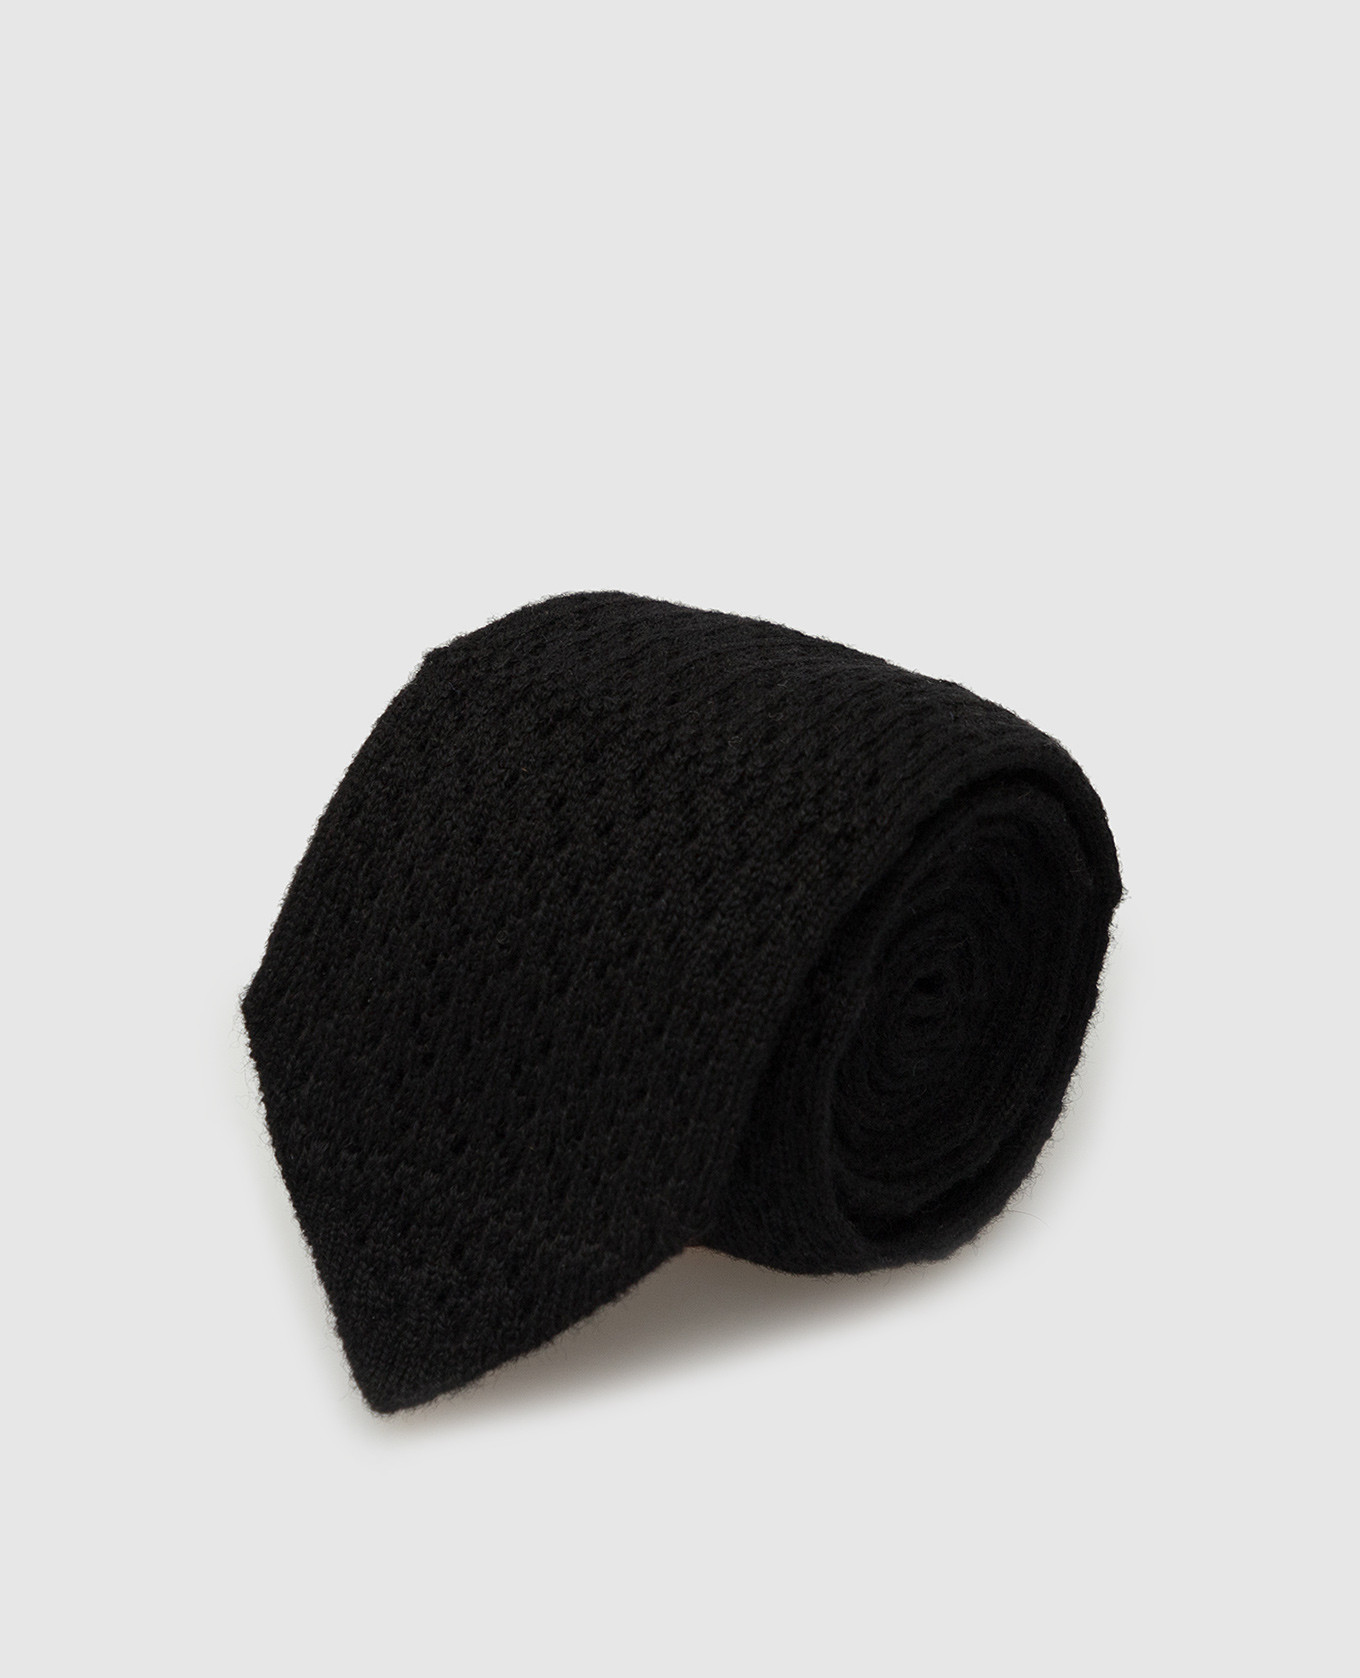 Children's black patterned cashmere tie